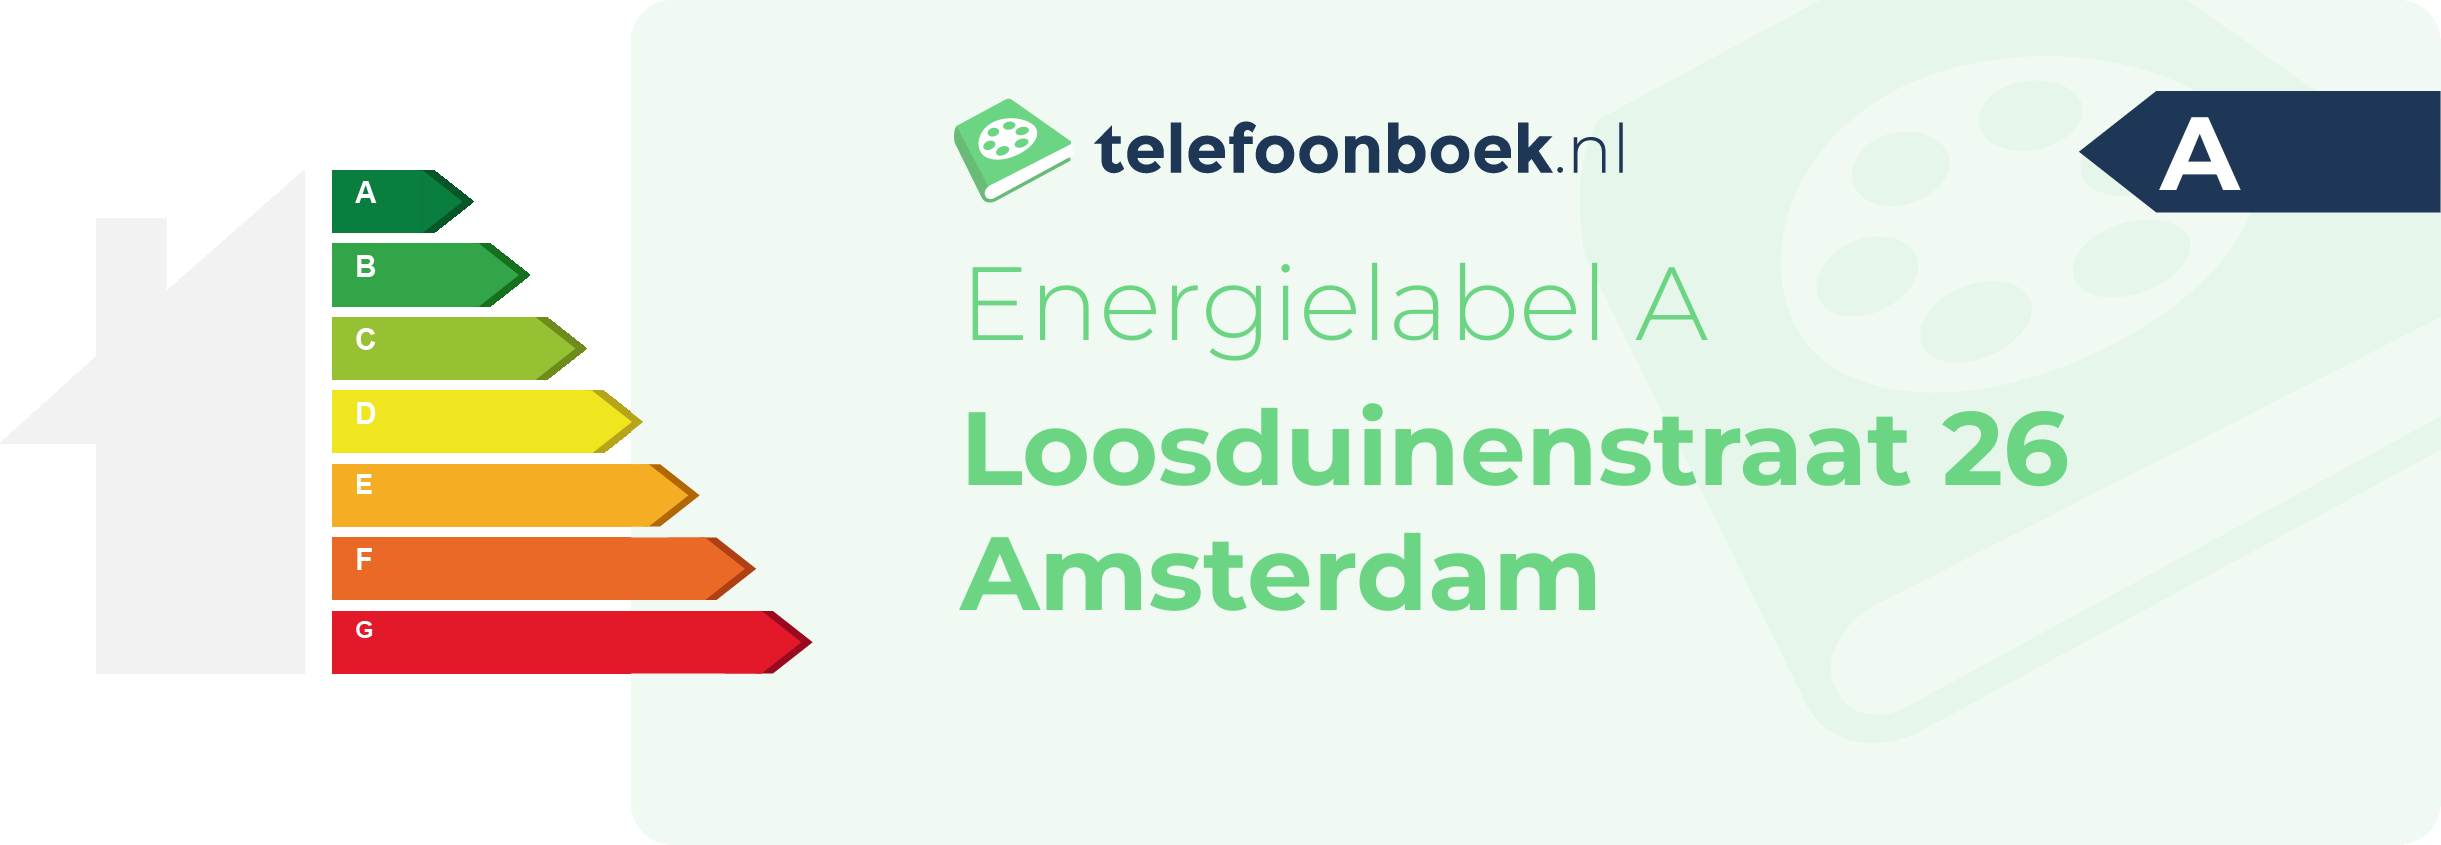 Energielabel Loosduinenstraat 26 Amsterdam